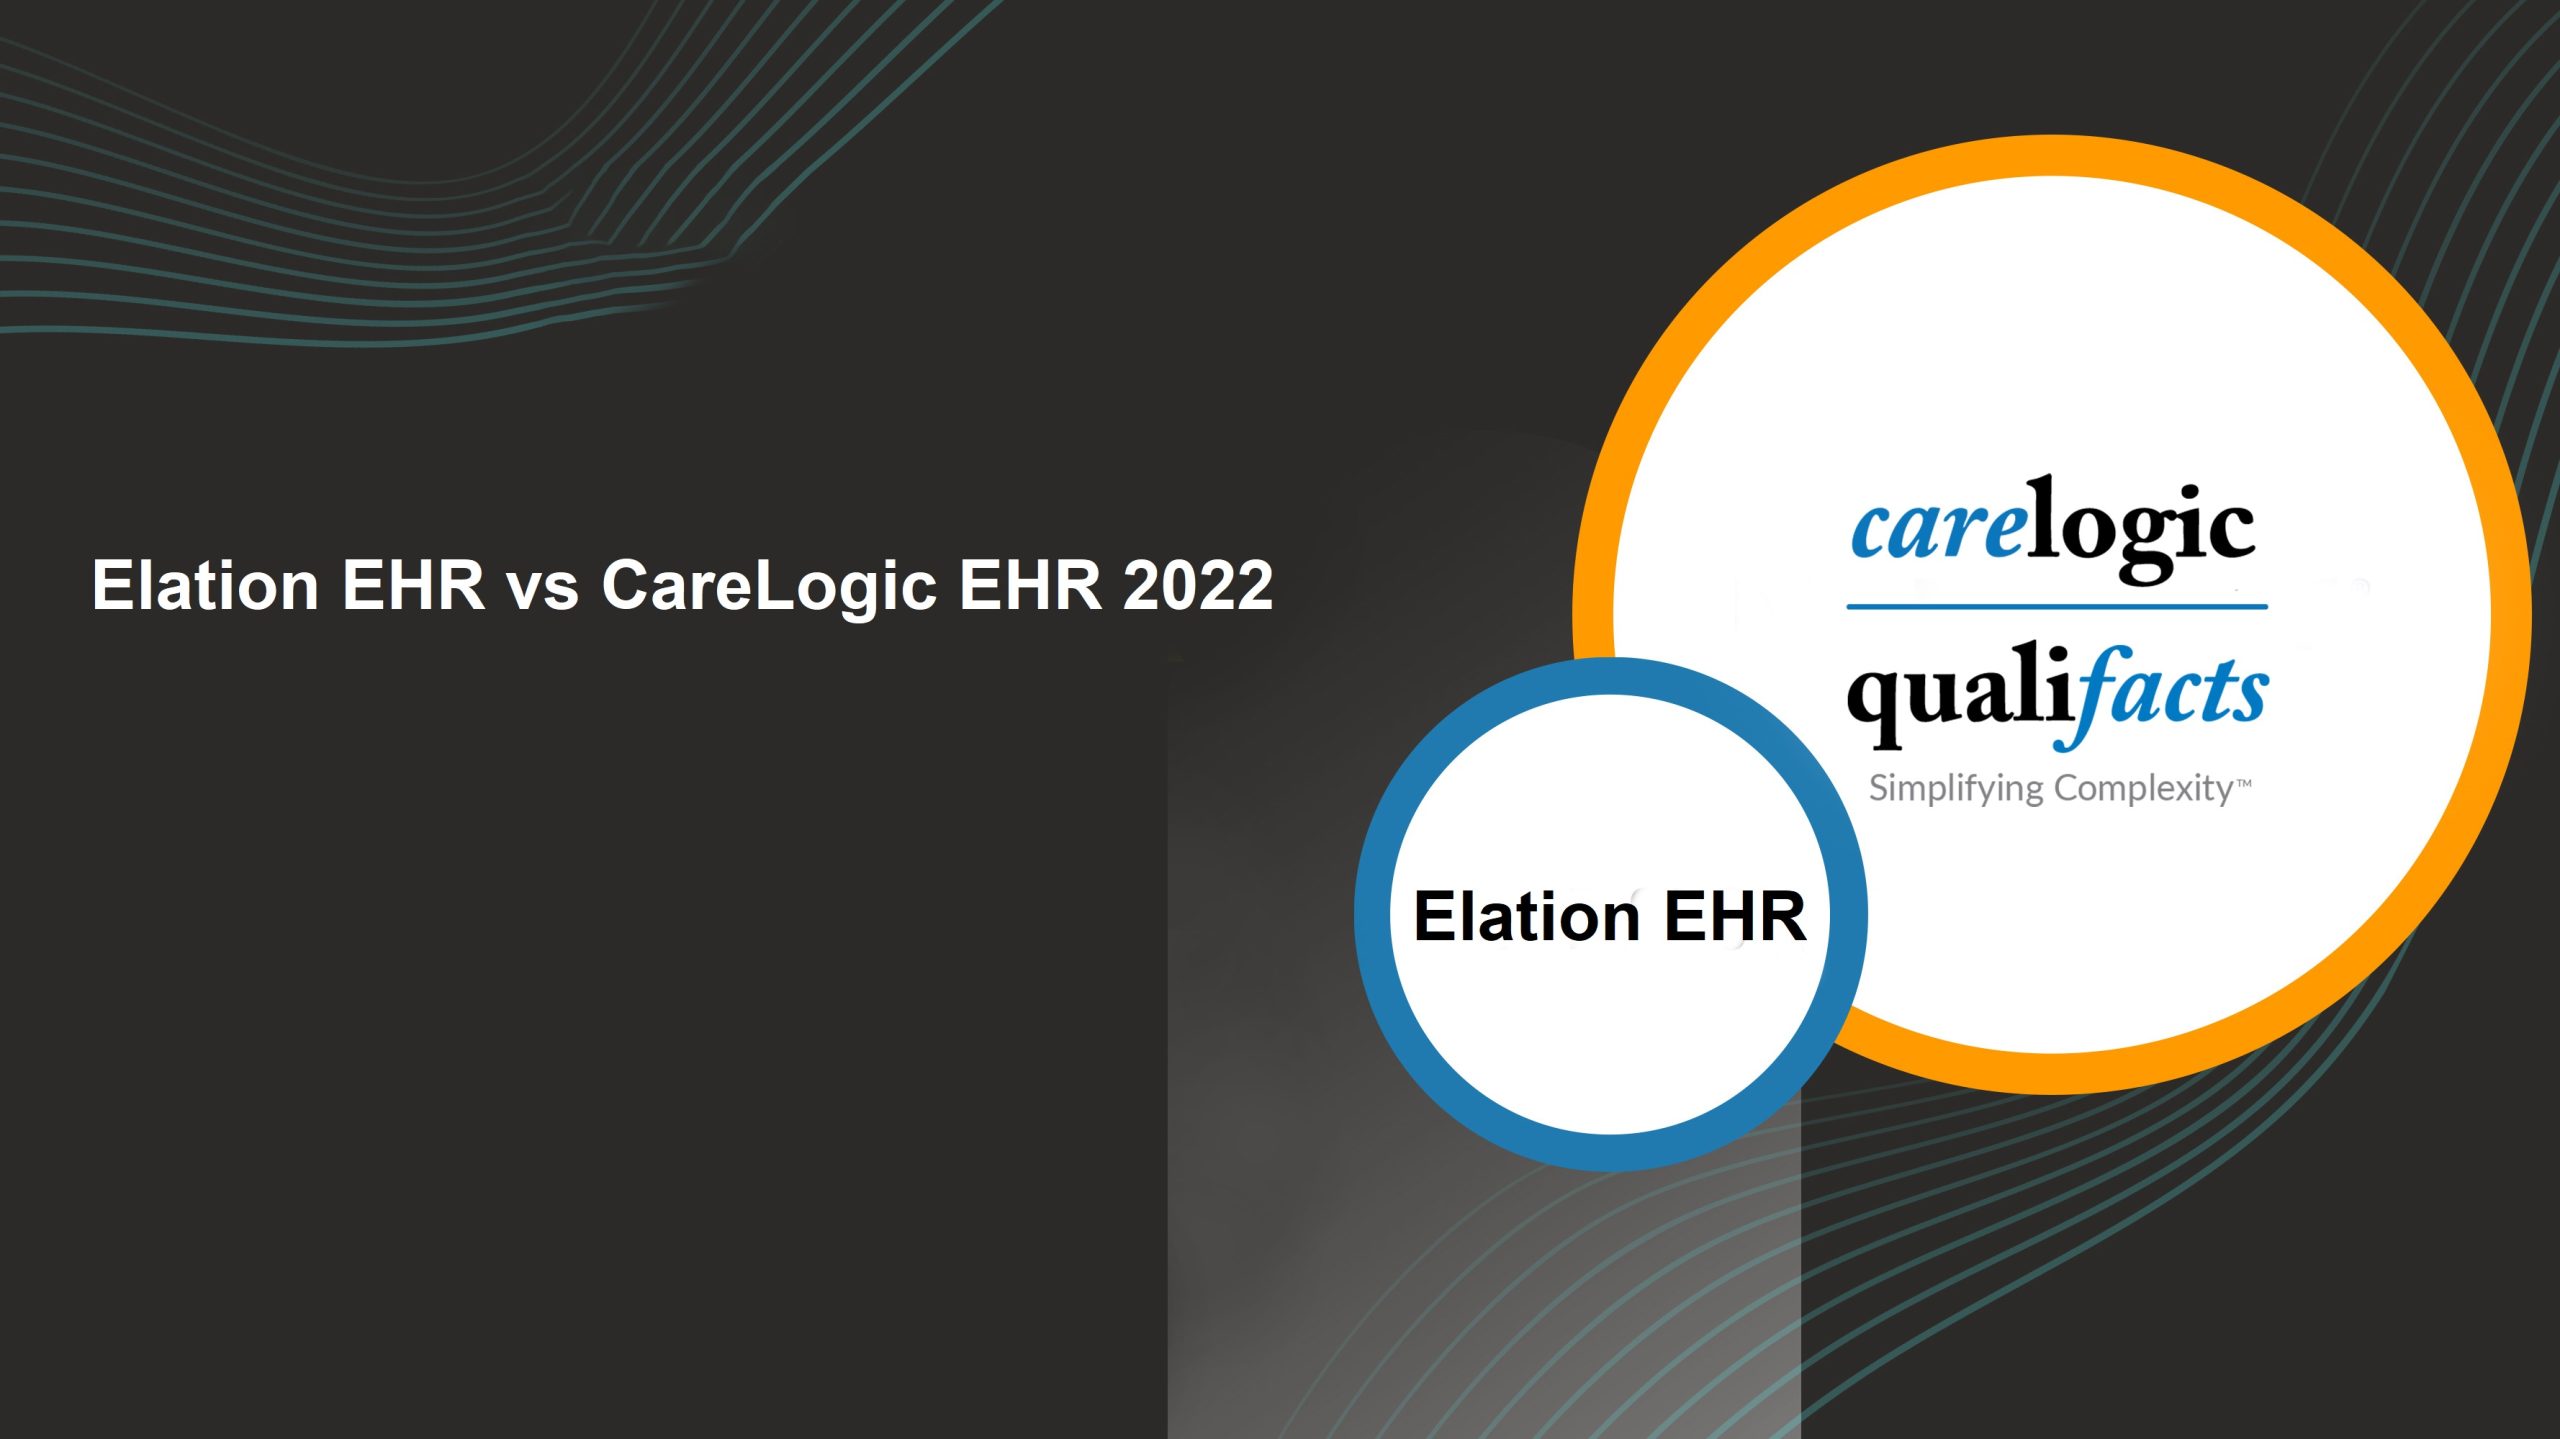 Elation EHR vs CareLogic EHR 2022 